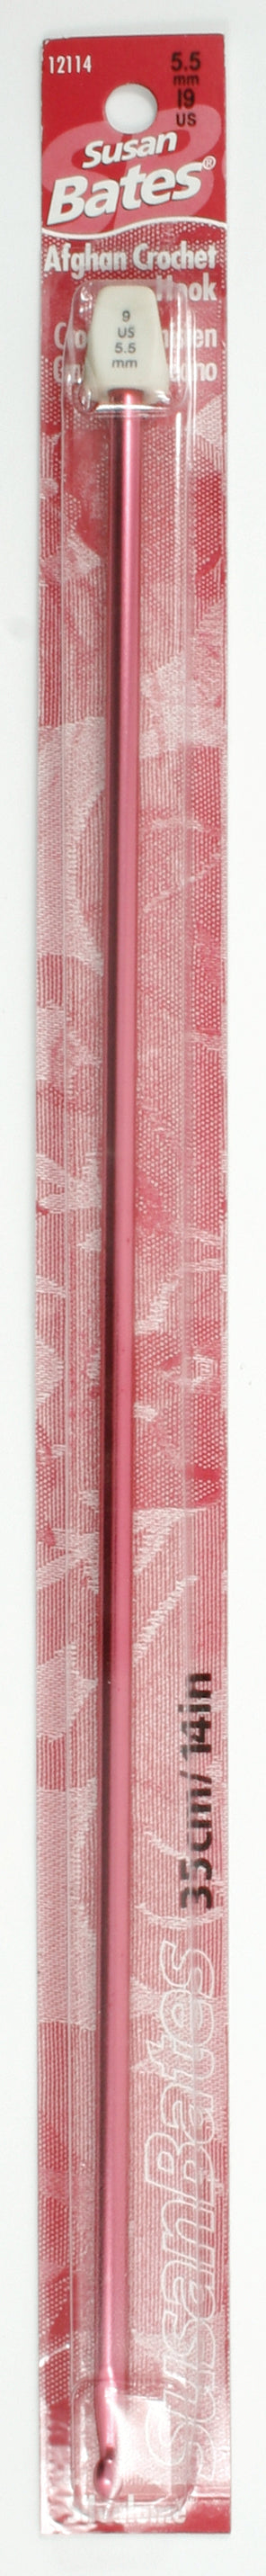 Crochet tunisien SB Silvalume 14 po, 5,5mm,I-9